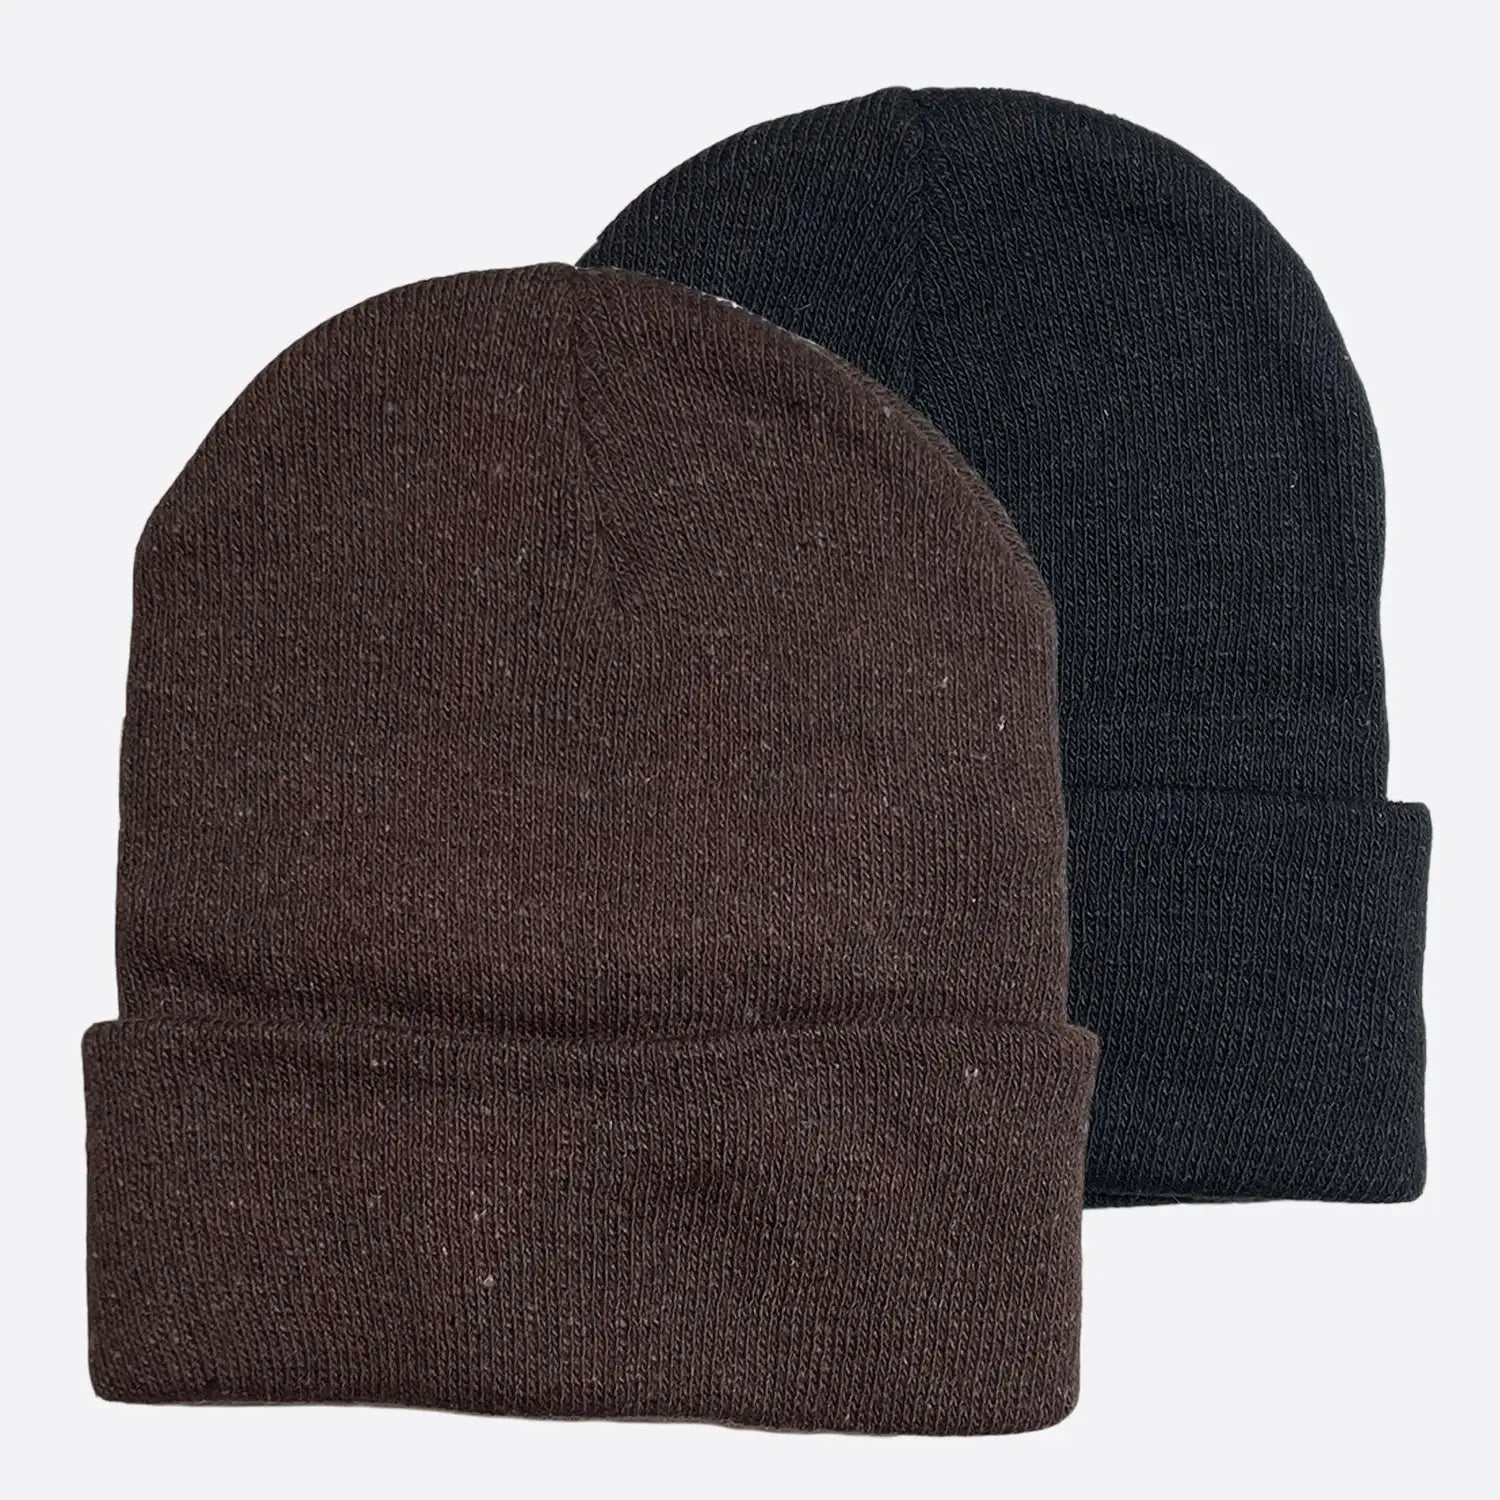 Unisex Cotton Blend Beanie Hats, 2pcs: Black and brown beanies